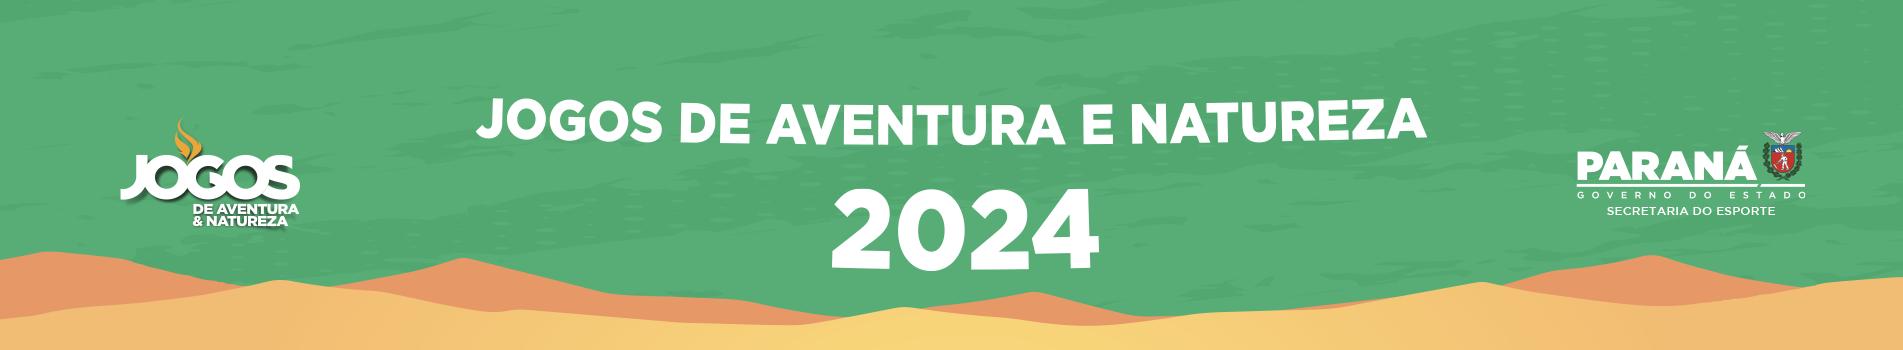 Jogos de Aventura e Natureza 2024